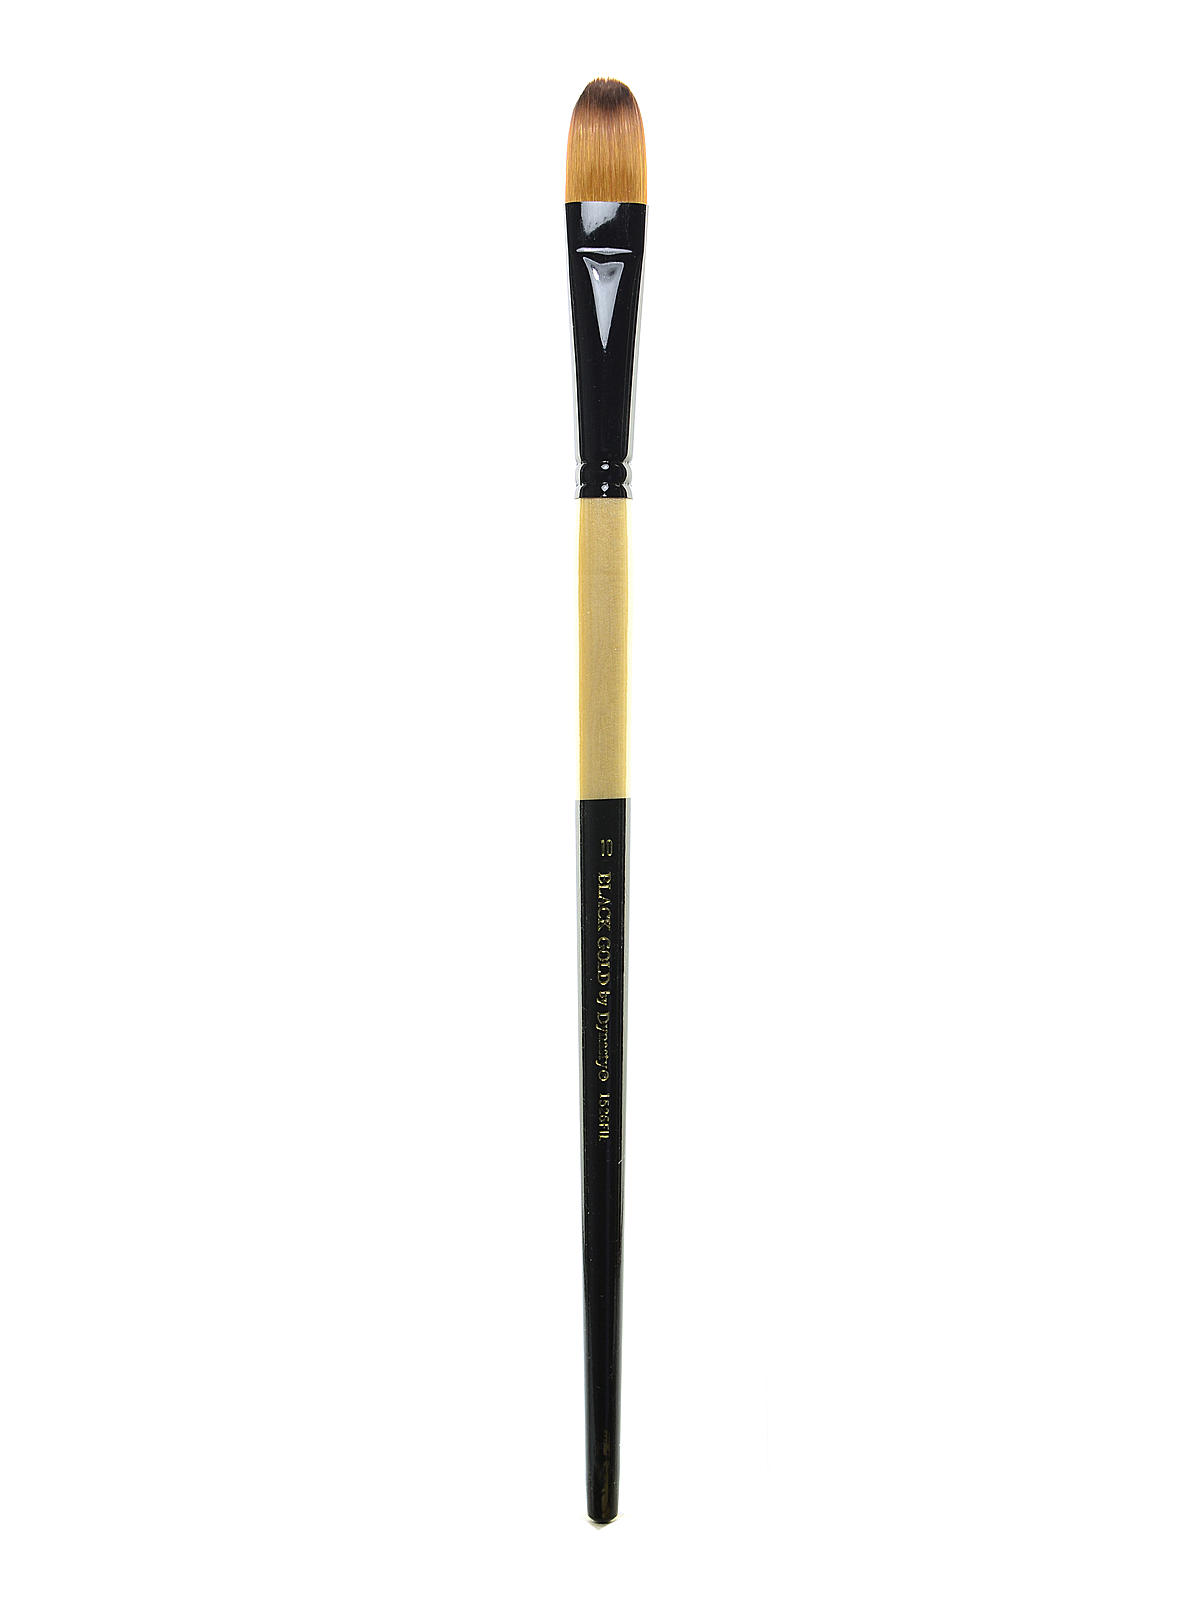 Black Gold Series Long Handled Synthetic Brushes 10 Filbert 1526fil